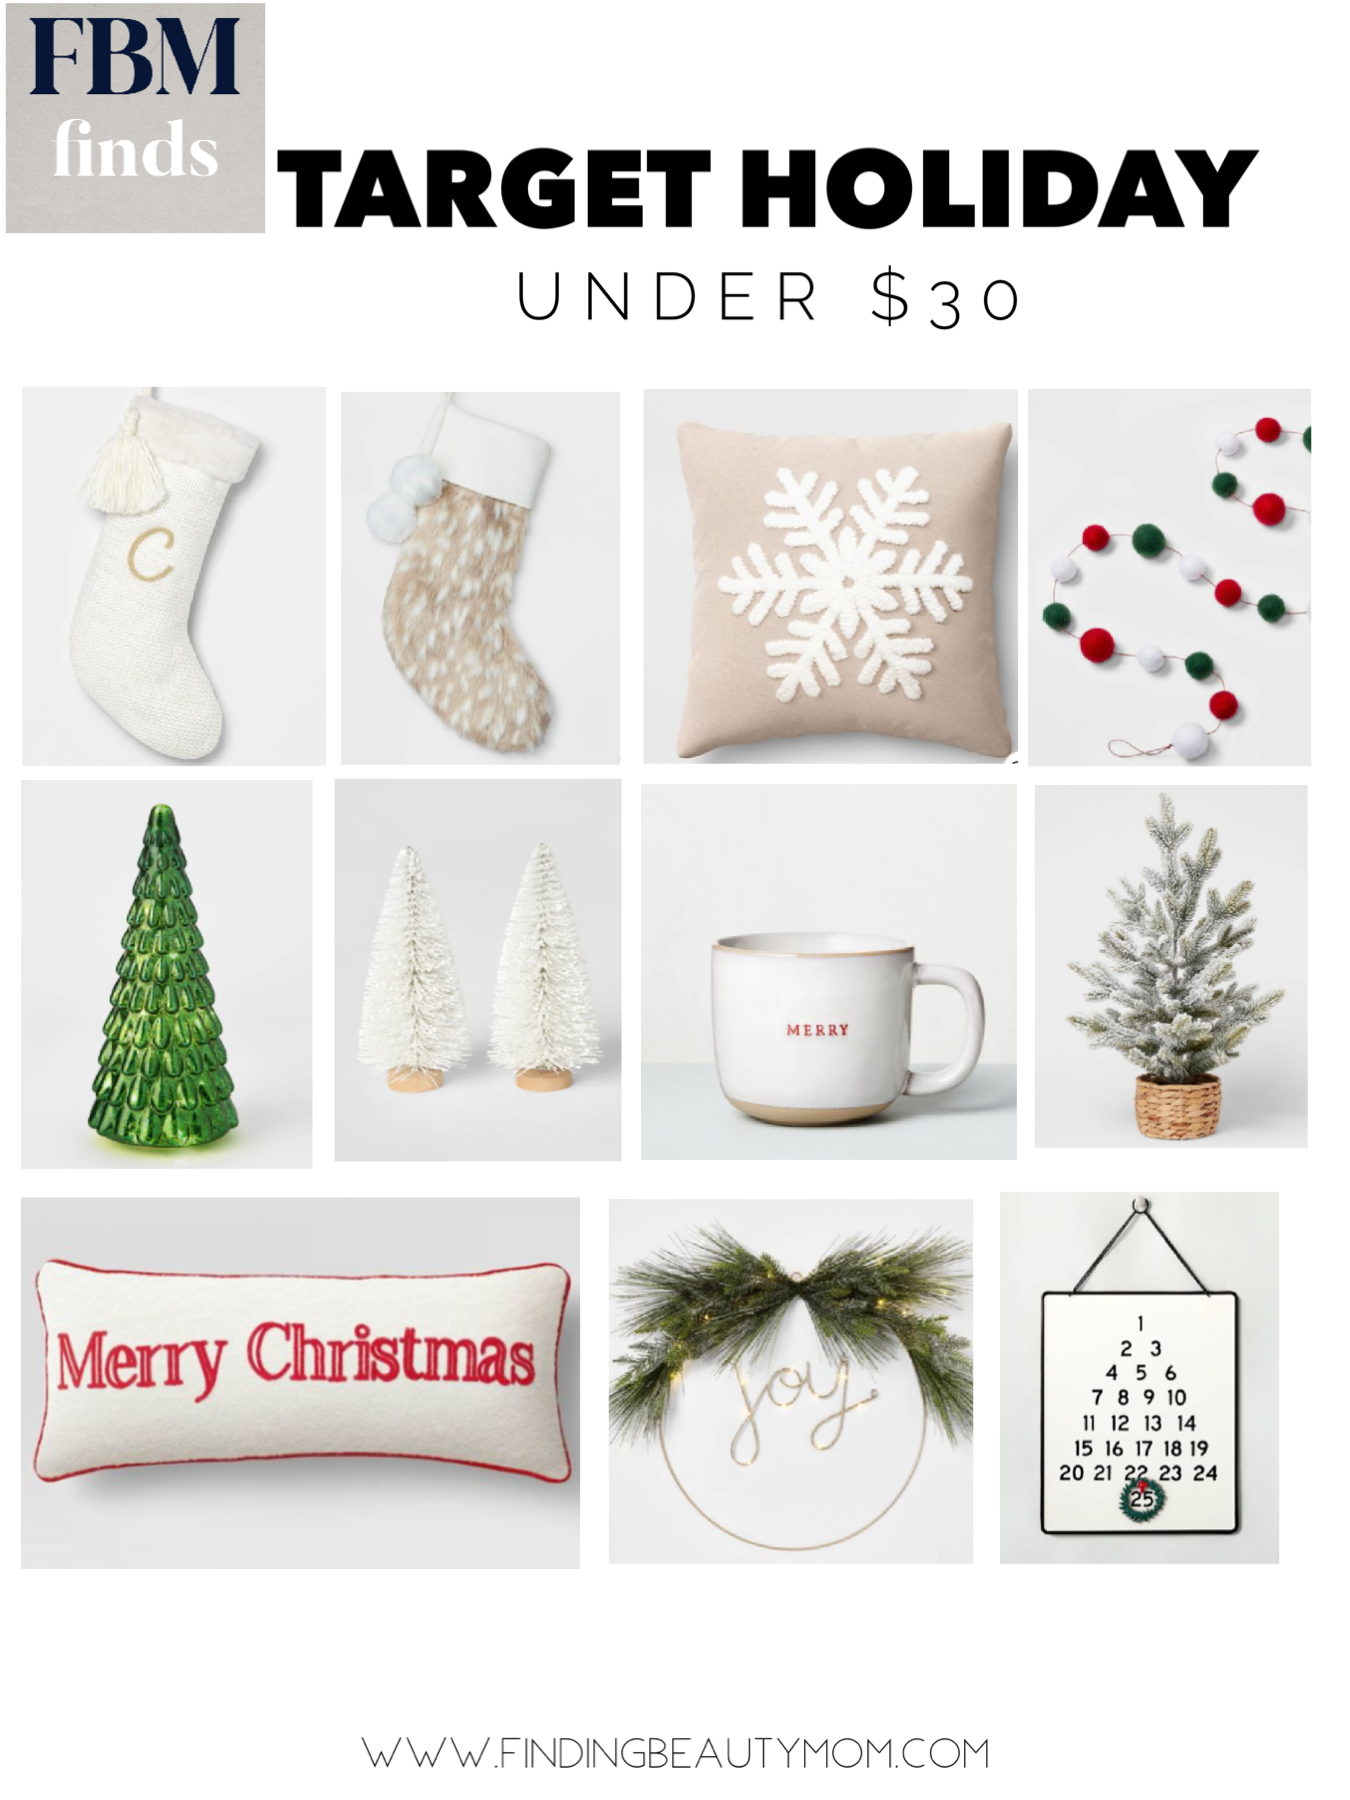 Target holiday decor under $30, simple Christmas decor, low key Christmas decor, low key holiday style, minimalist holiday decor 